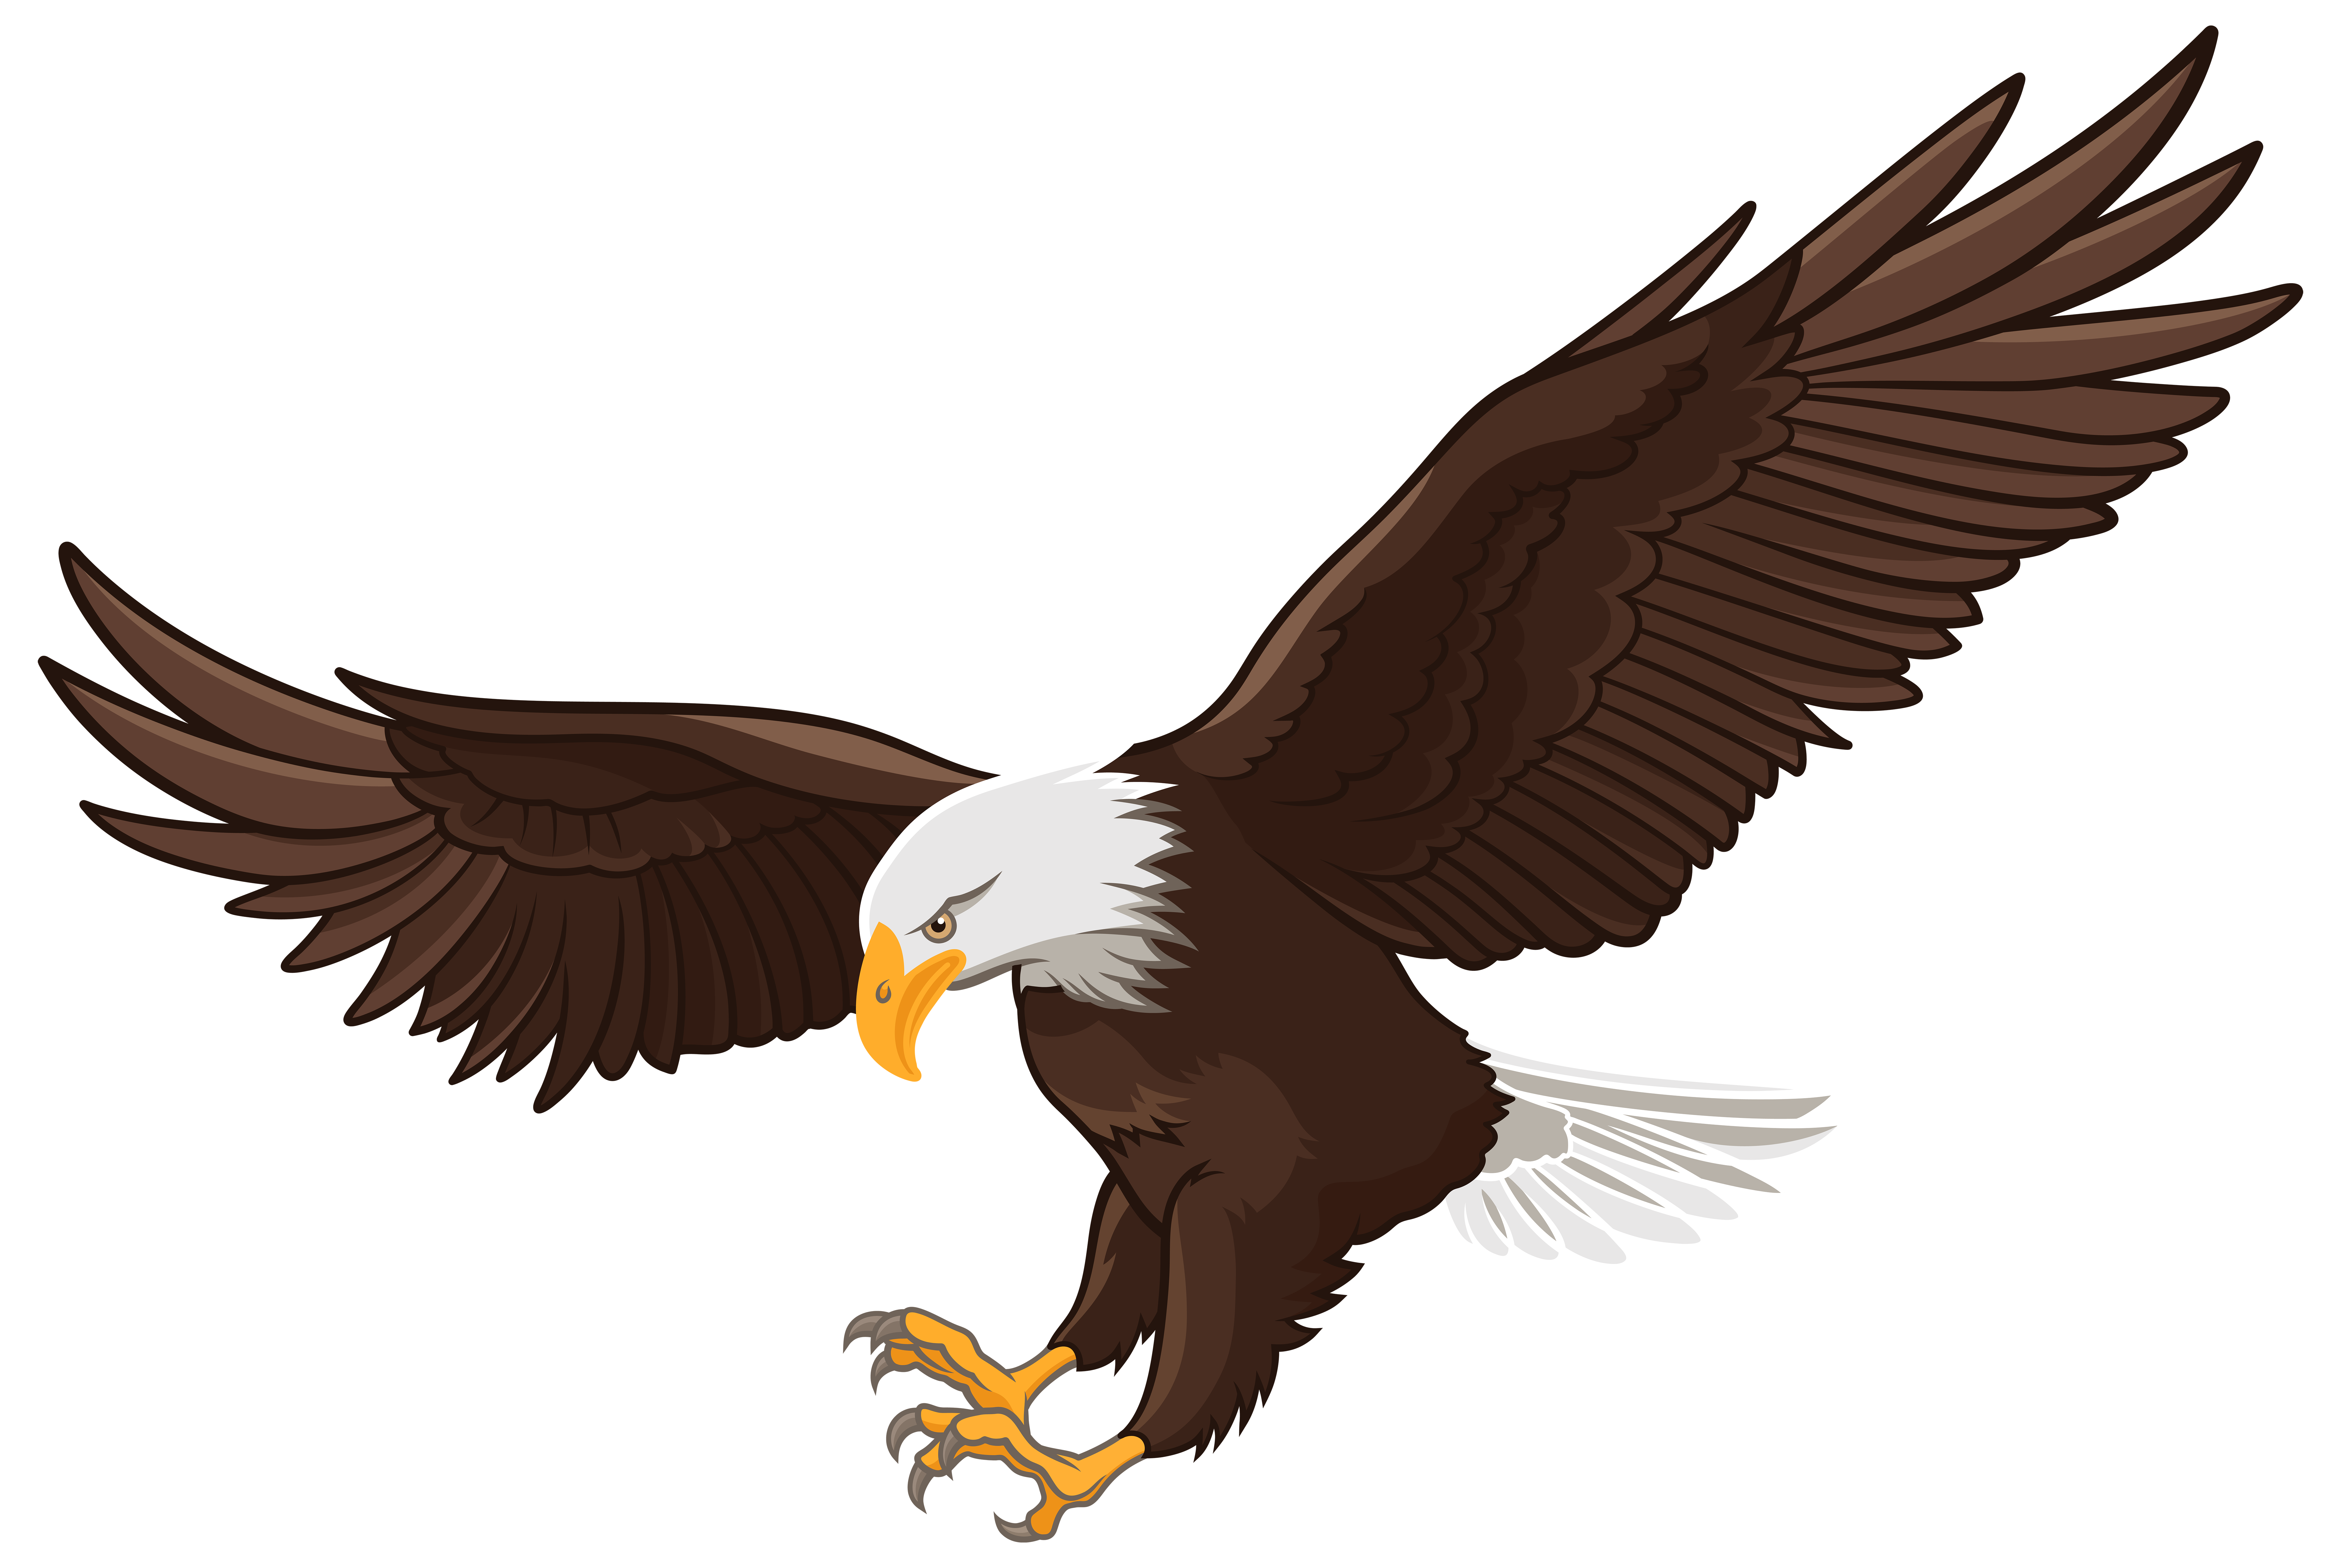 clip art eagle